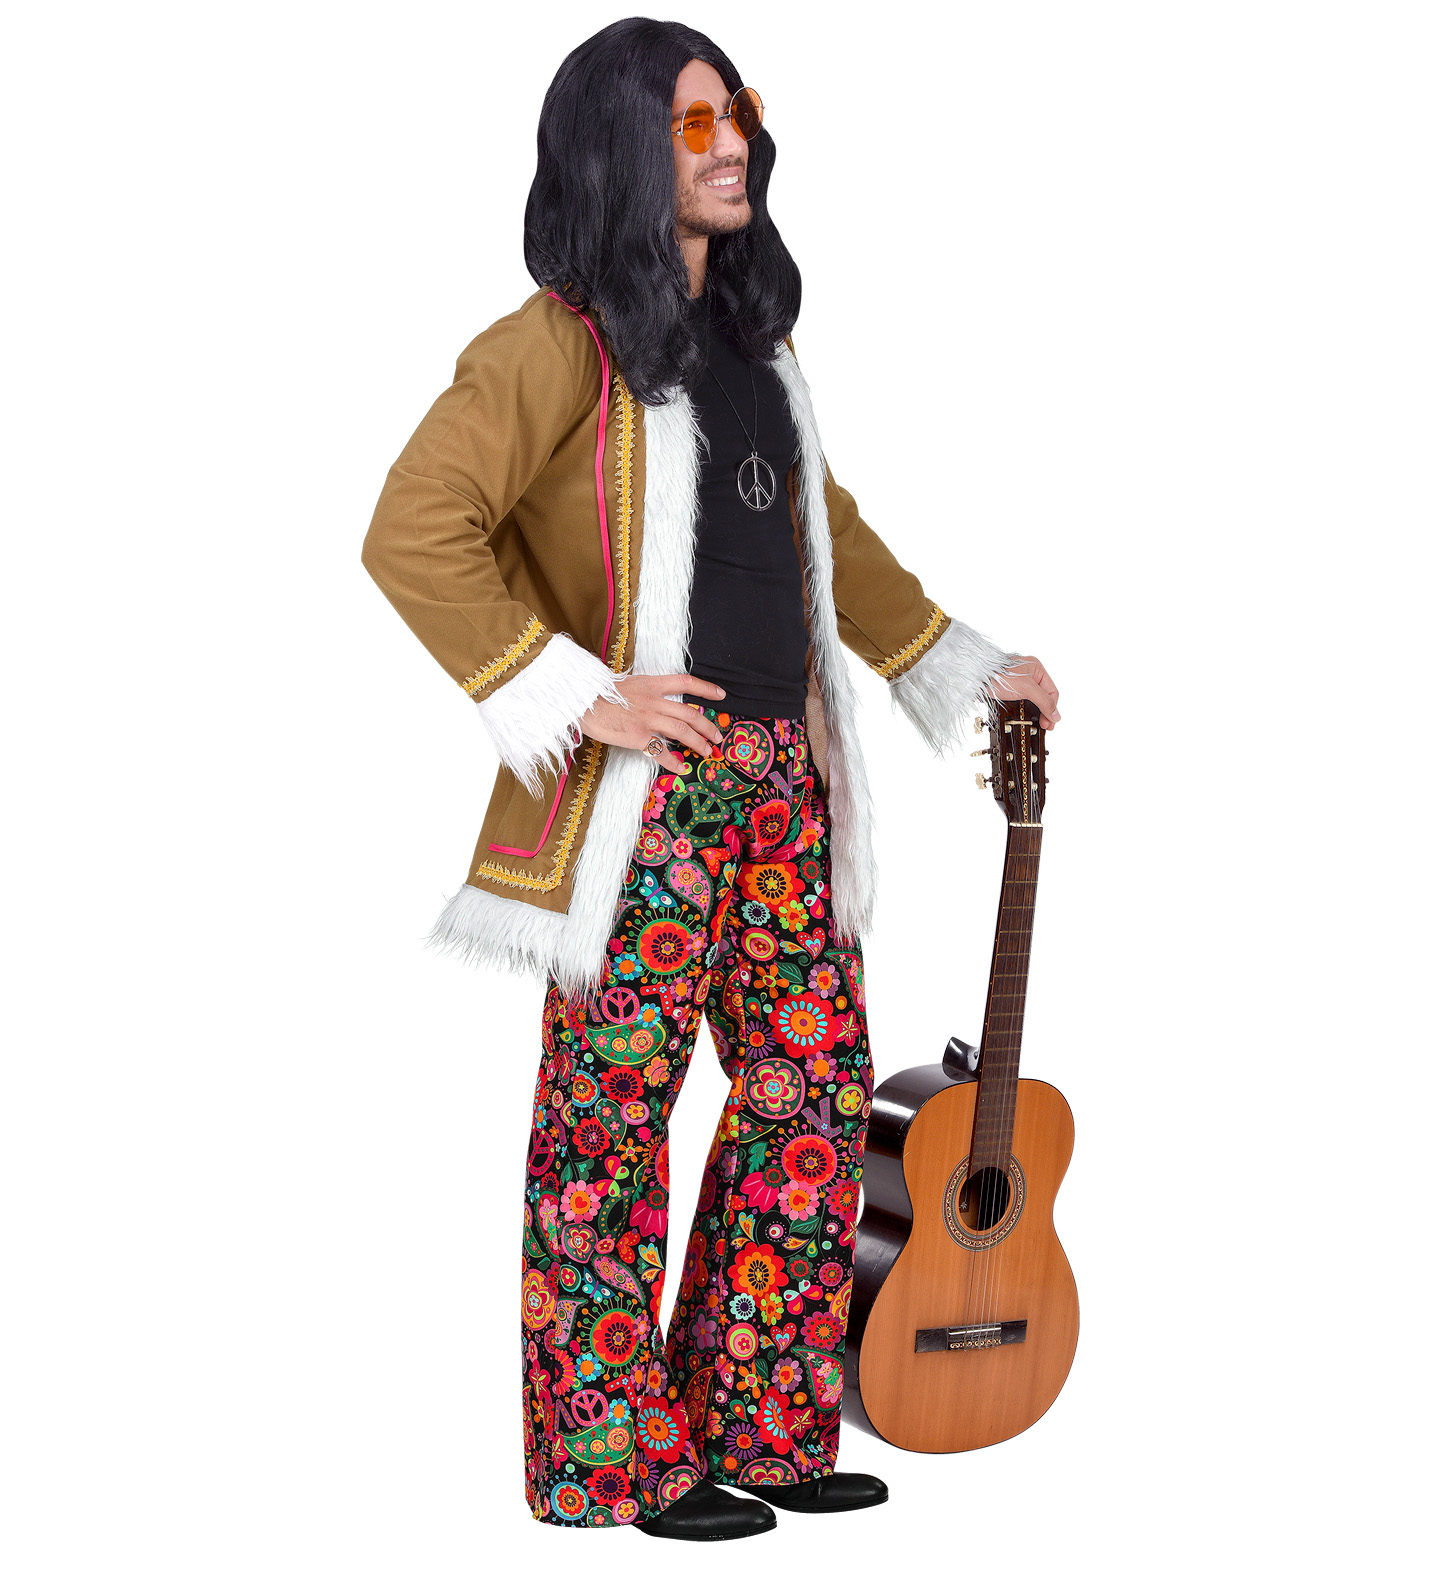 Woodstock Hippie Costume - Adult